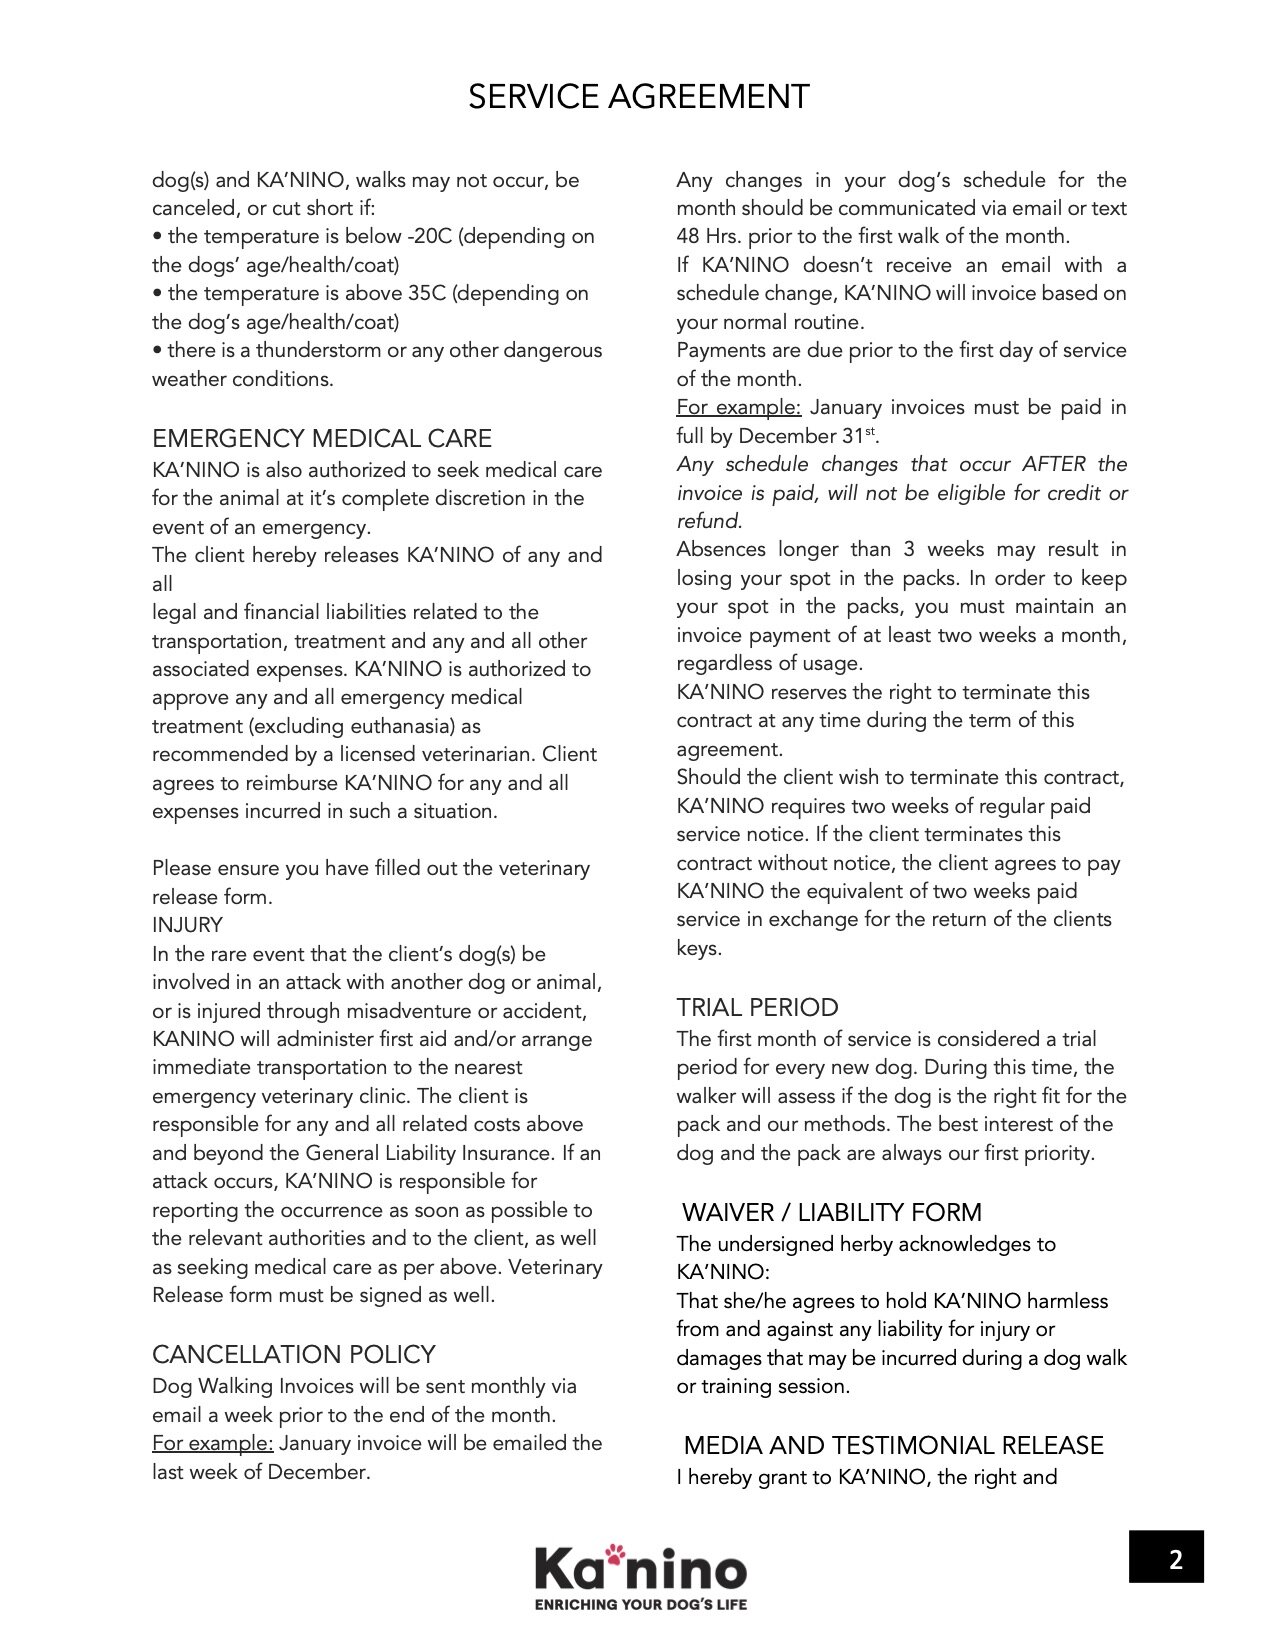 Ka'nino - Service agreement 2020 (Update)p2.jpg